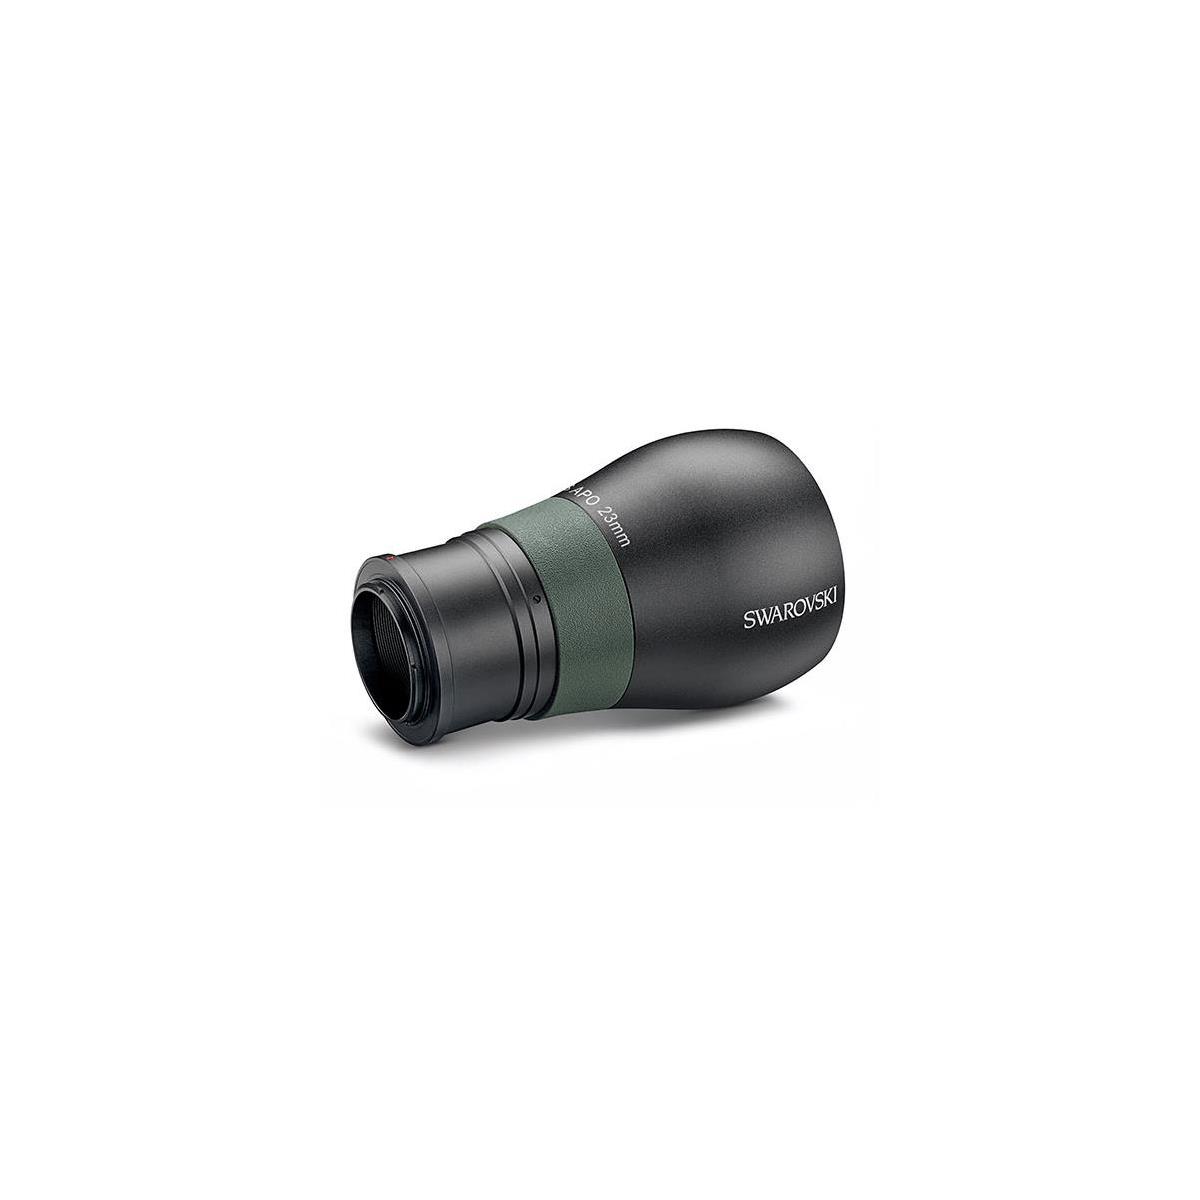 Swarovski Optik TLS APO 23mm Telephoto Lens System for ATX/STX Adapter - Black -  49332